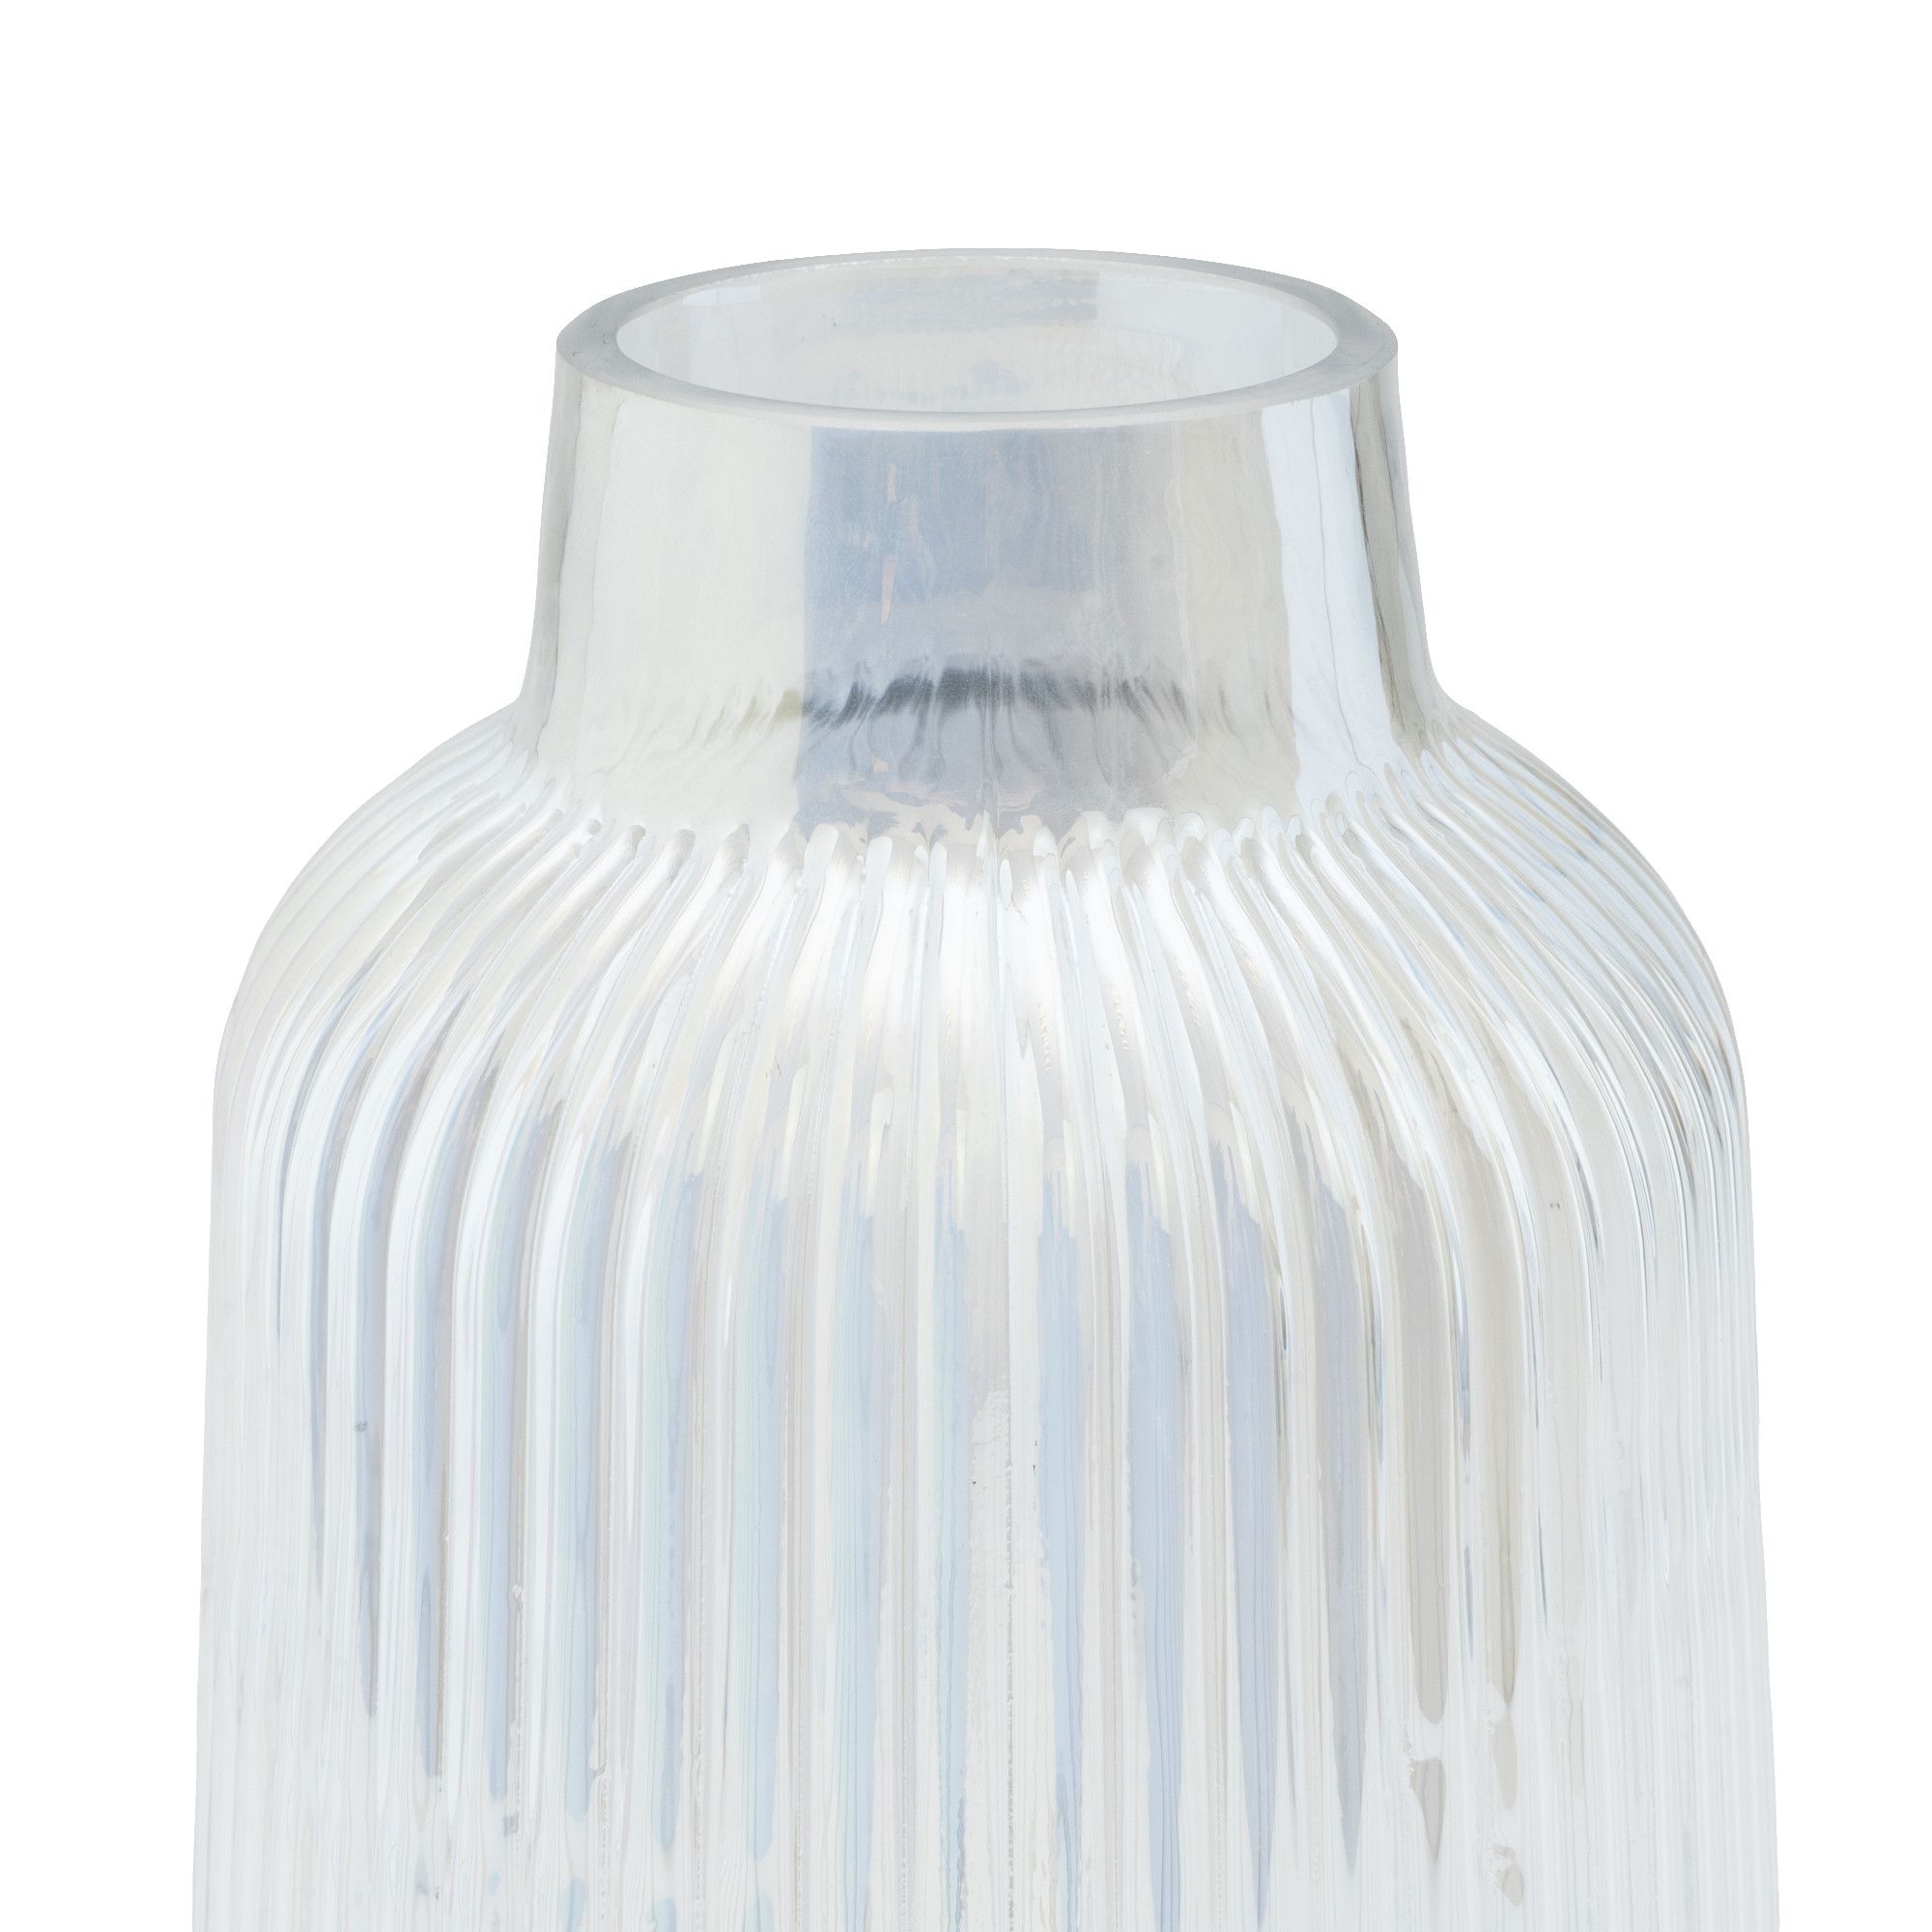 Medium Ribbed Chrome effect Gloss Vase, 27cm